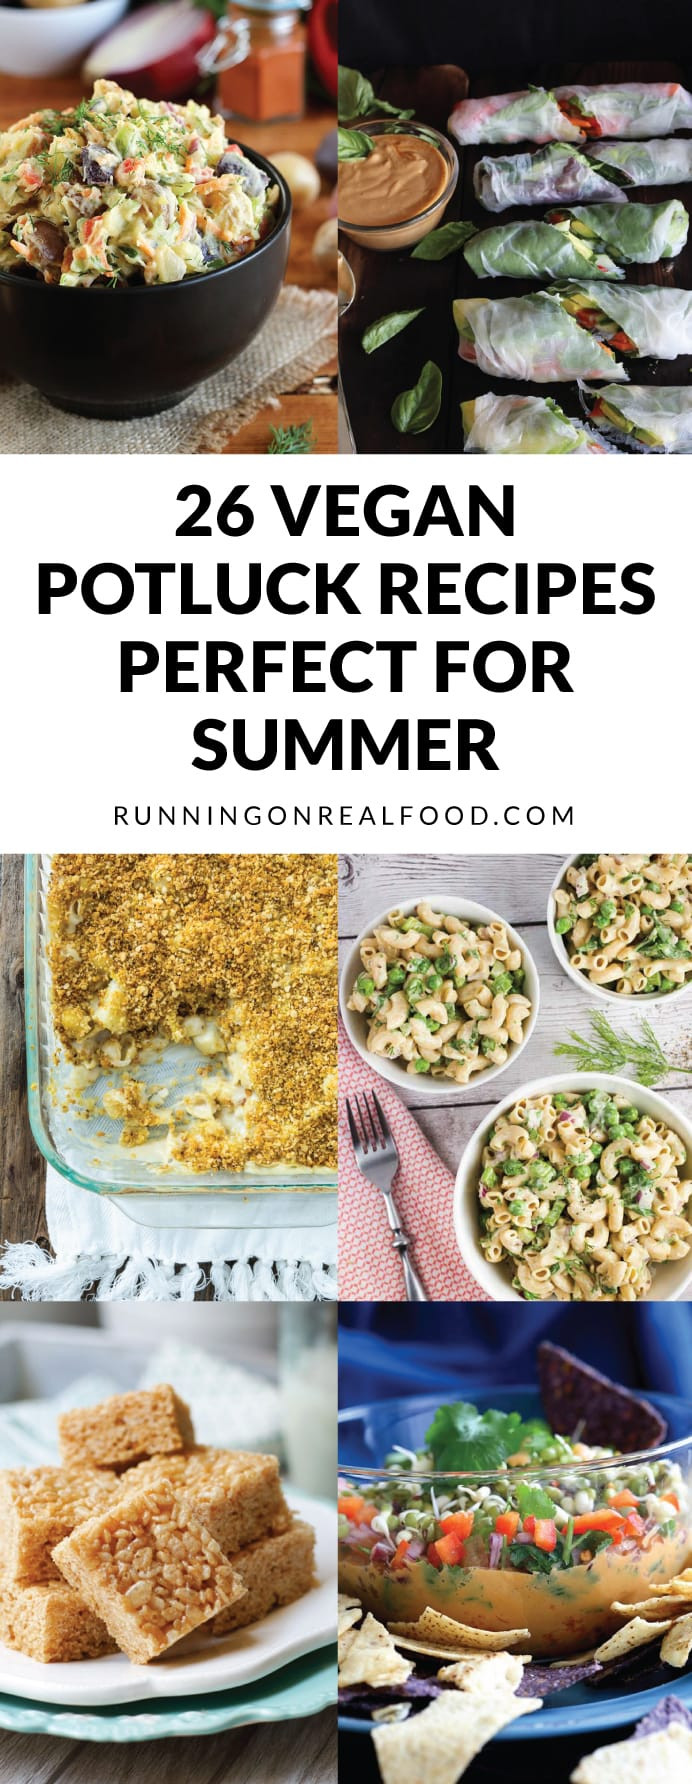 Beach Party Potluck Food Ideas
 26 Vegan Potluck Recipes Perfect for Summer